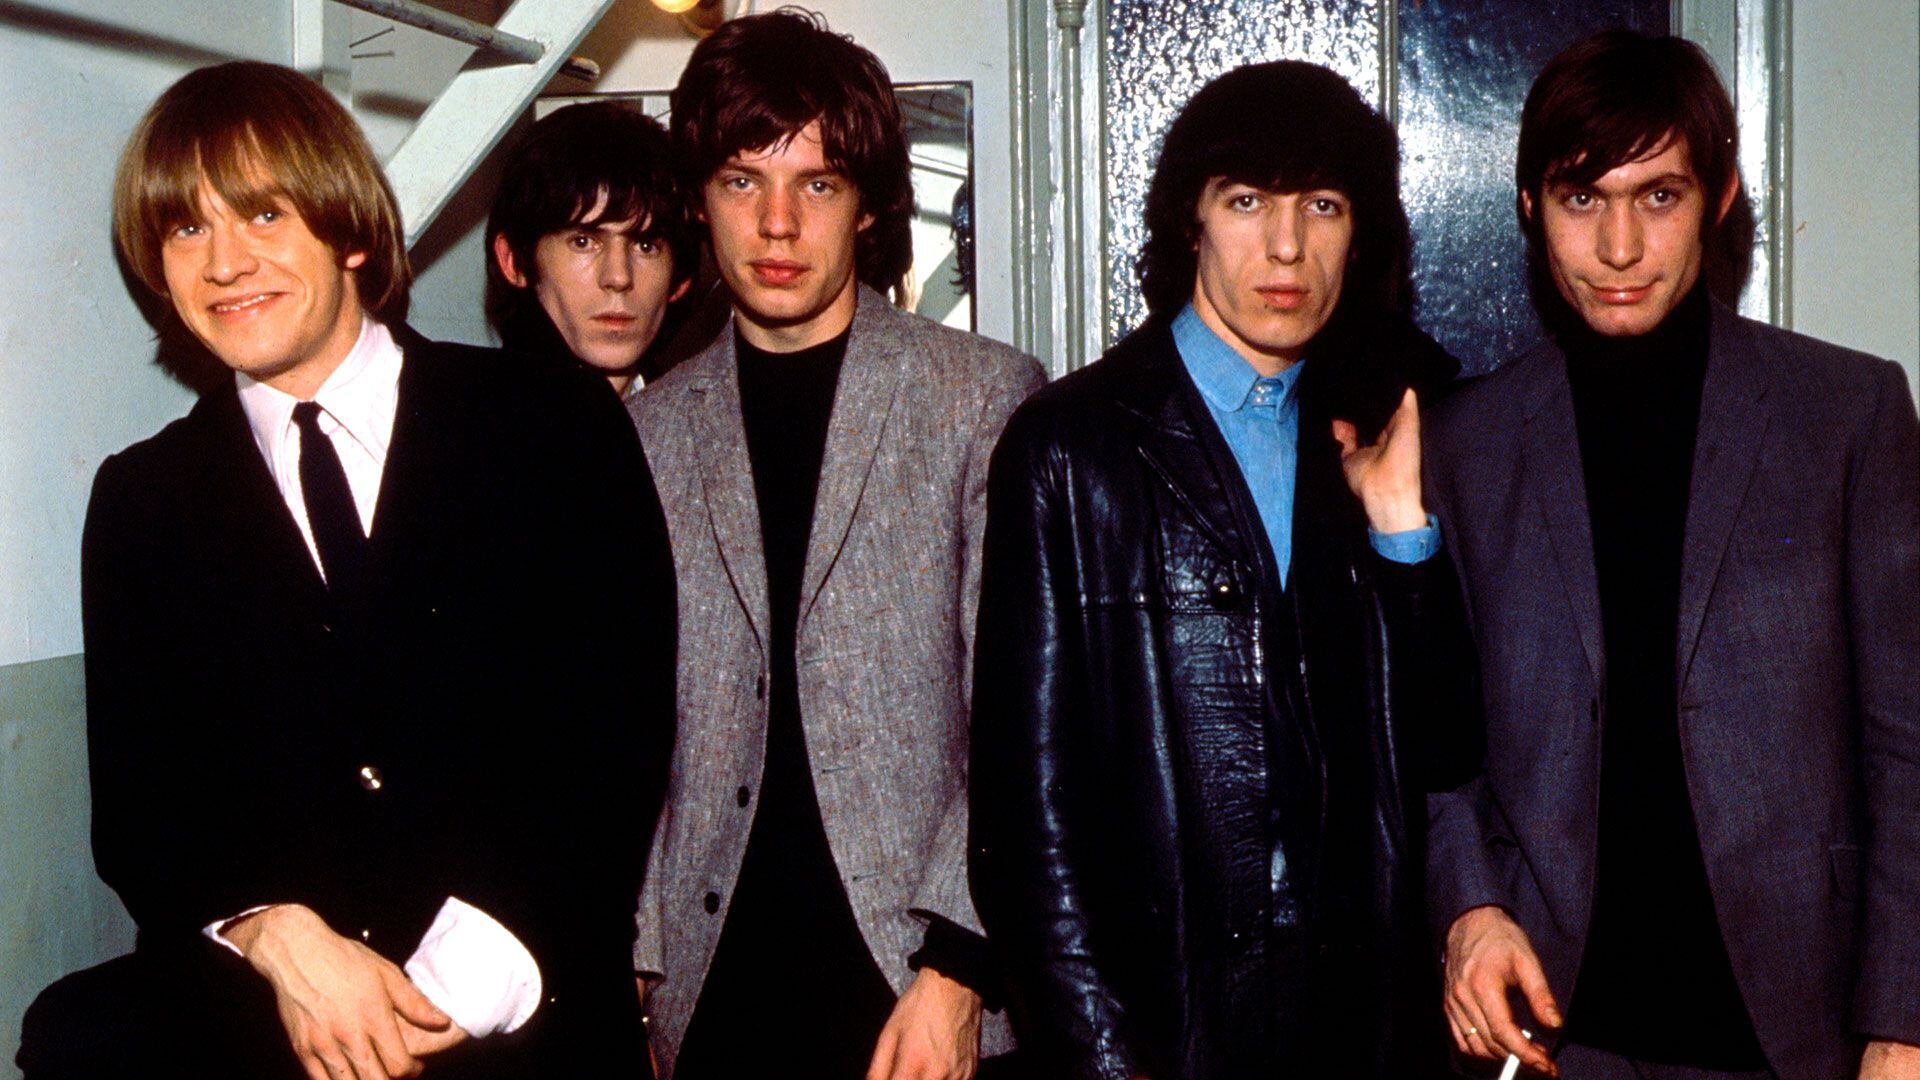 Los Rolling Stones en los años sesenta: Brian Jones, Keith Richards, Mick Jagger, Bill Wyman y Charlie Watts (Photo by King Collection/Avalon/Getty Images)